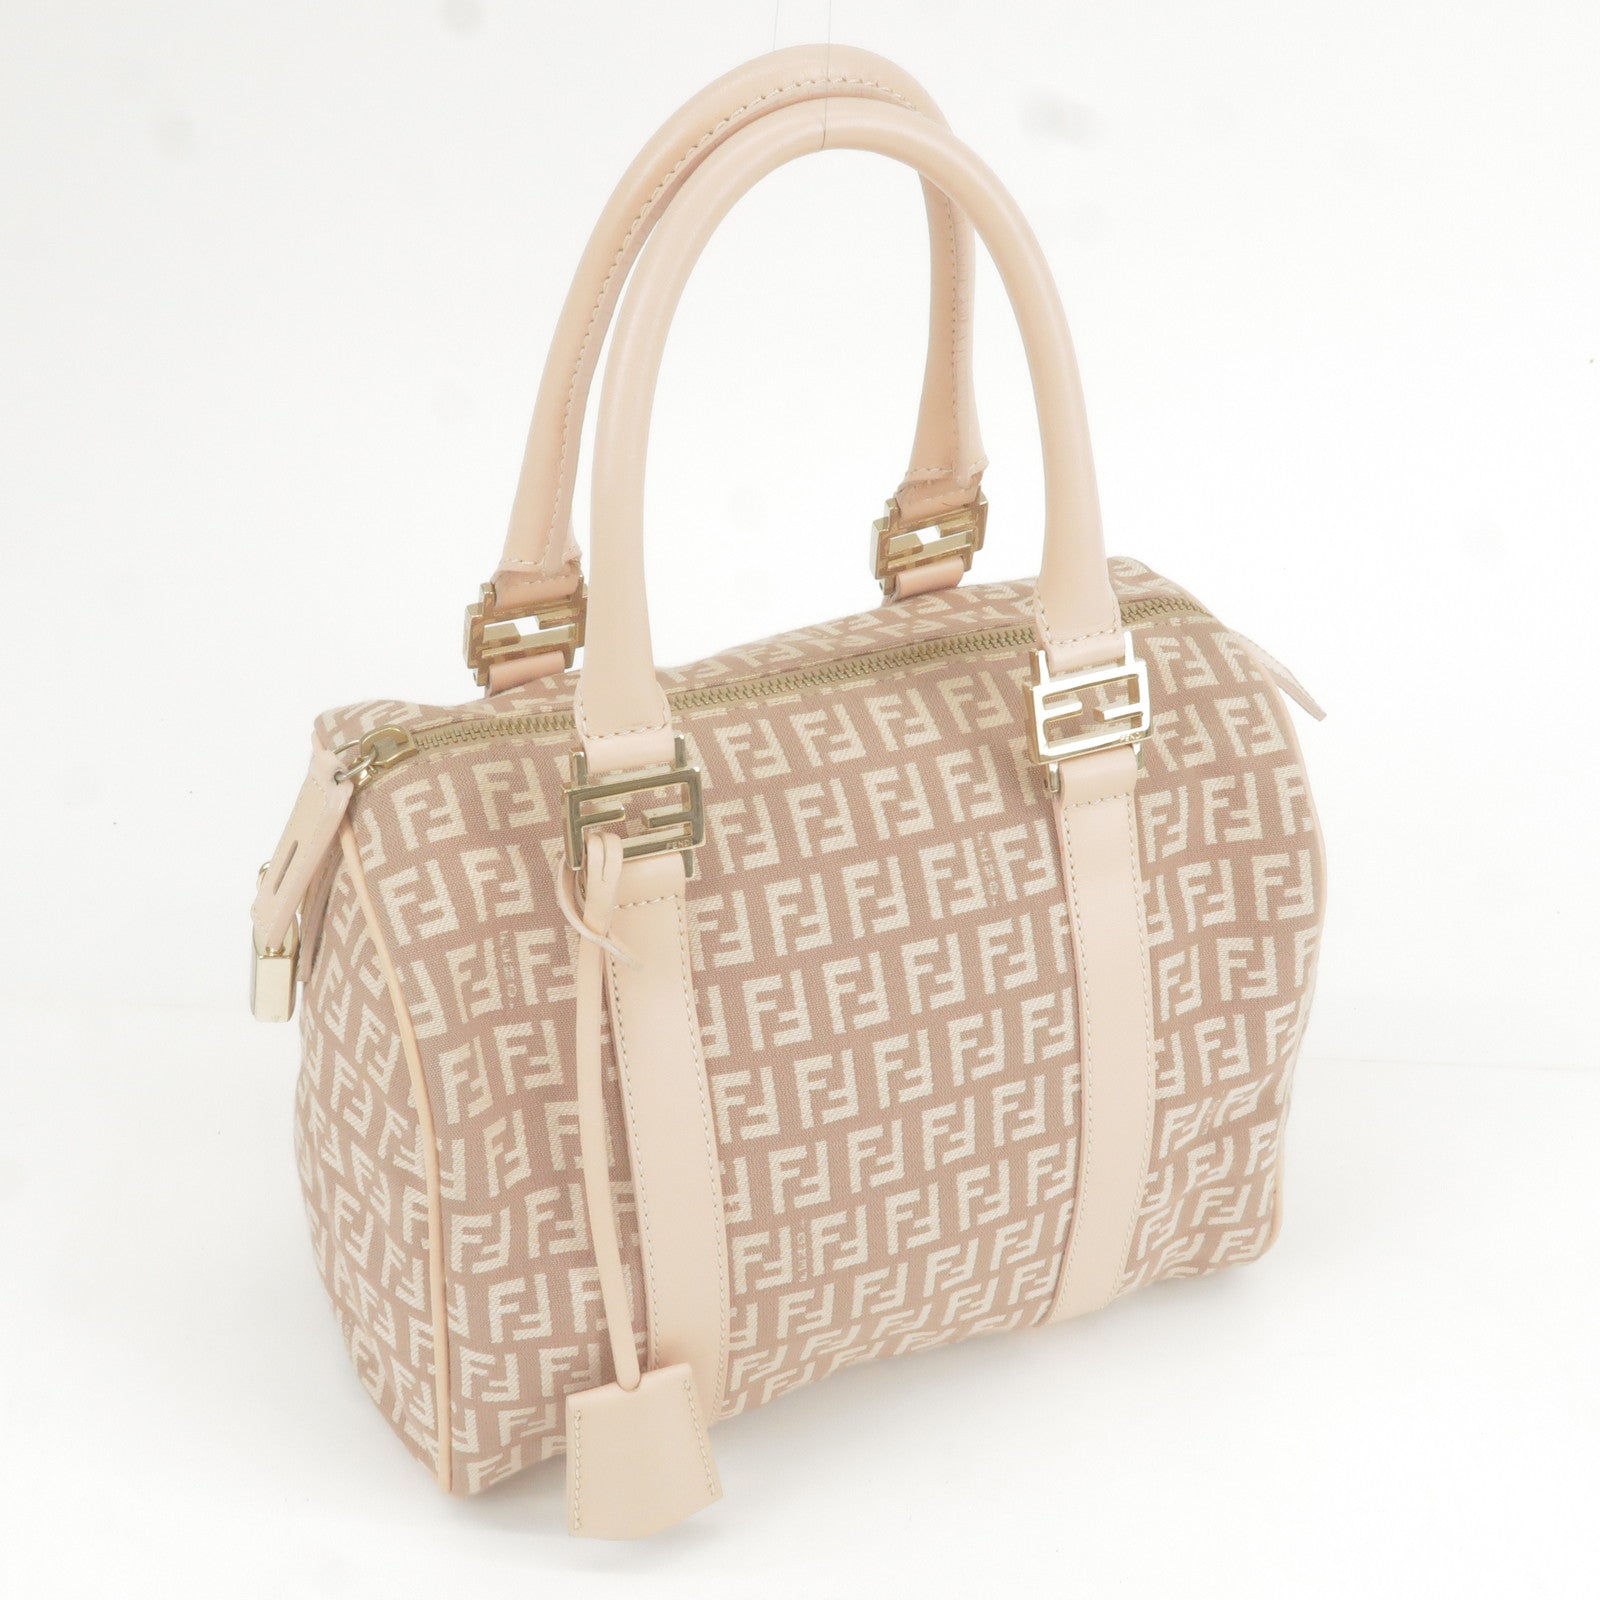 Boston - Pink - Bag - FENDI PRINTED VISOR - Canvas - FENDI - Beige -  Zucchino - 8BL068 – dct - Leather - ep_vintage luxury Store